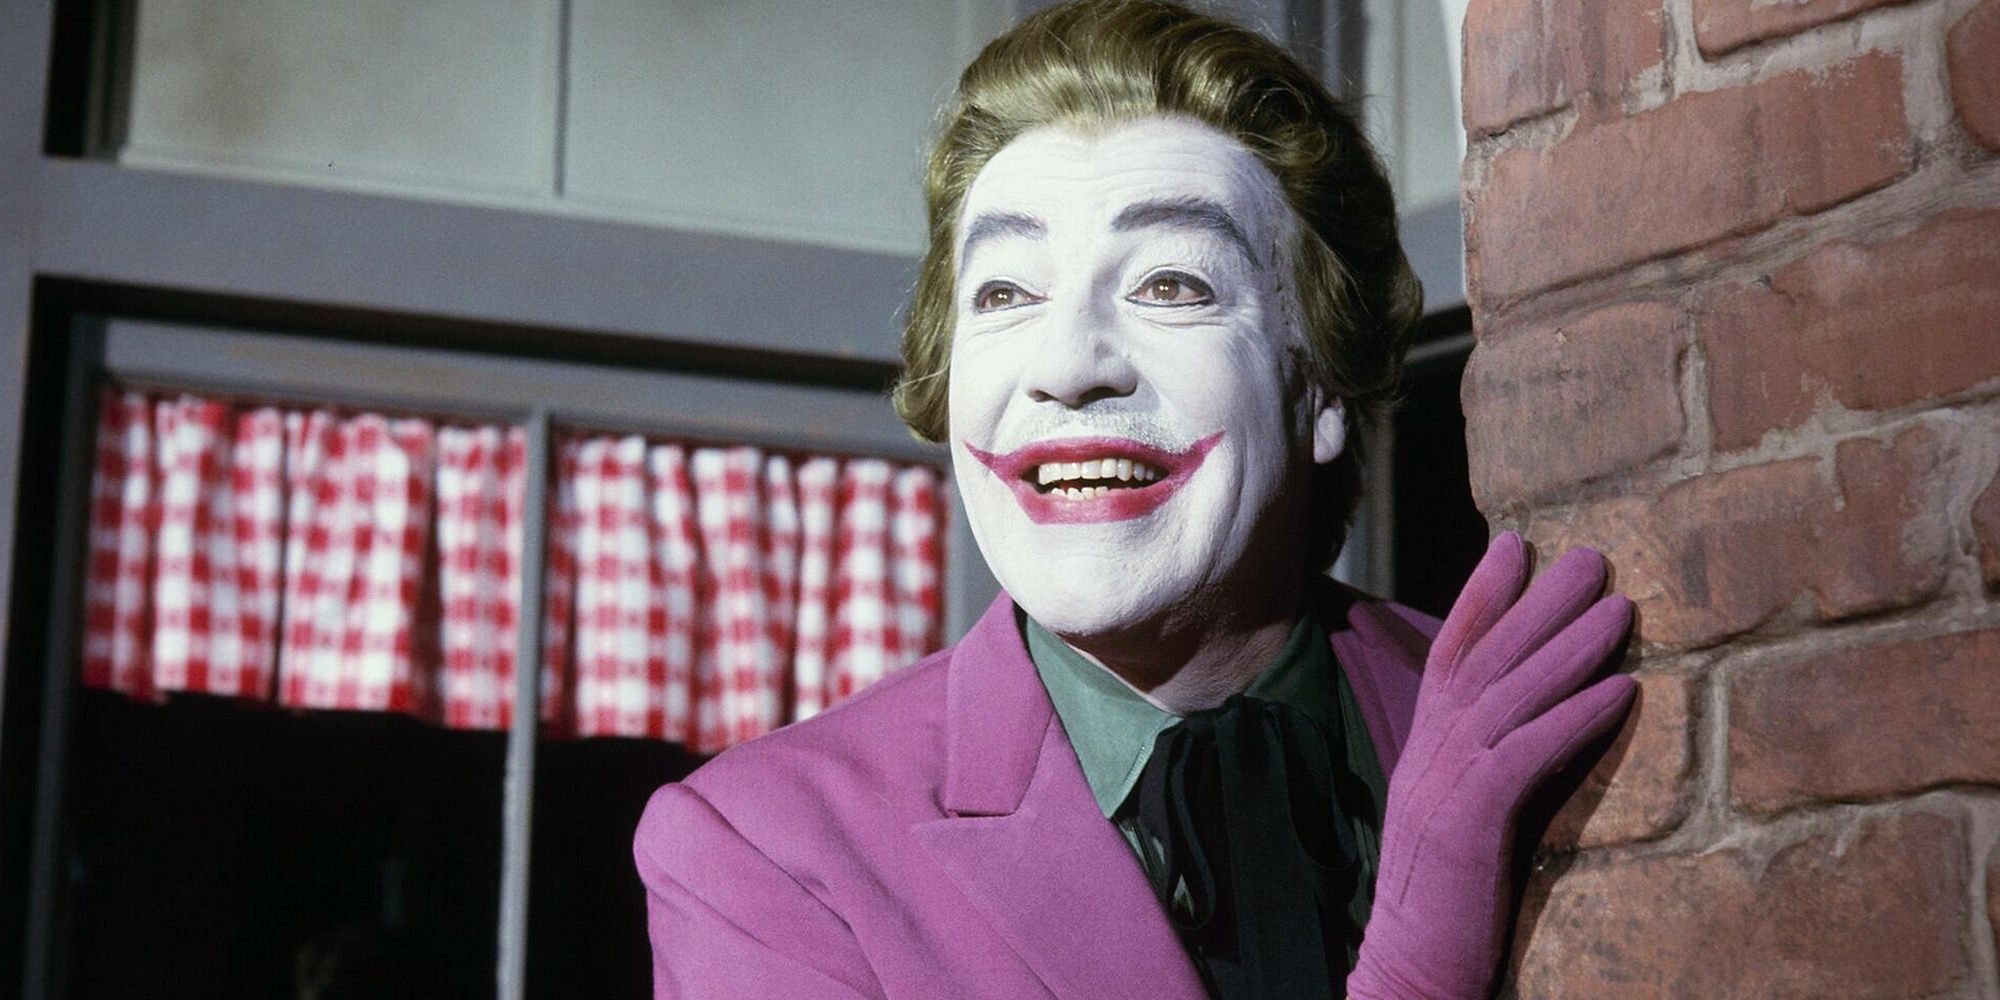 Cesar Romero as the Joker in the 60s Batman series